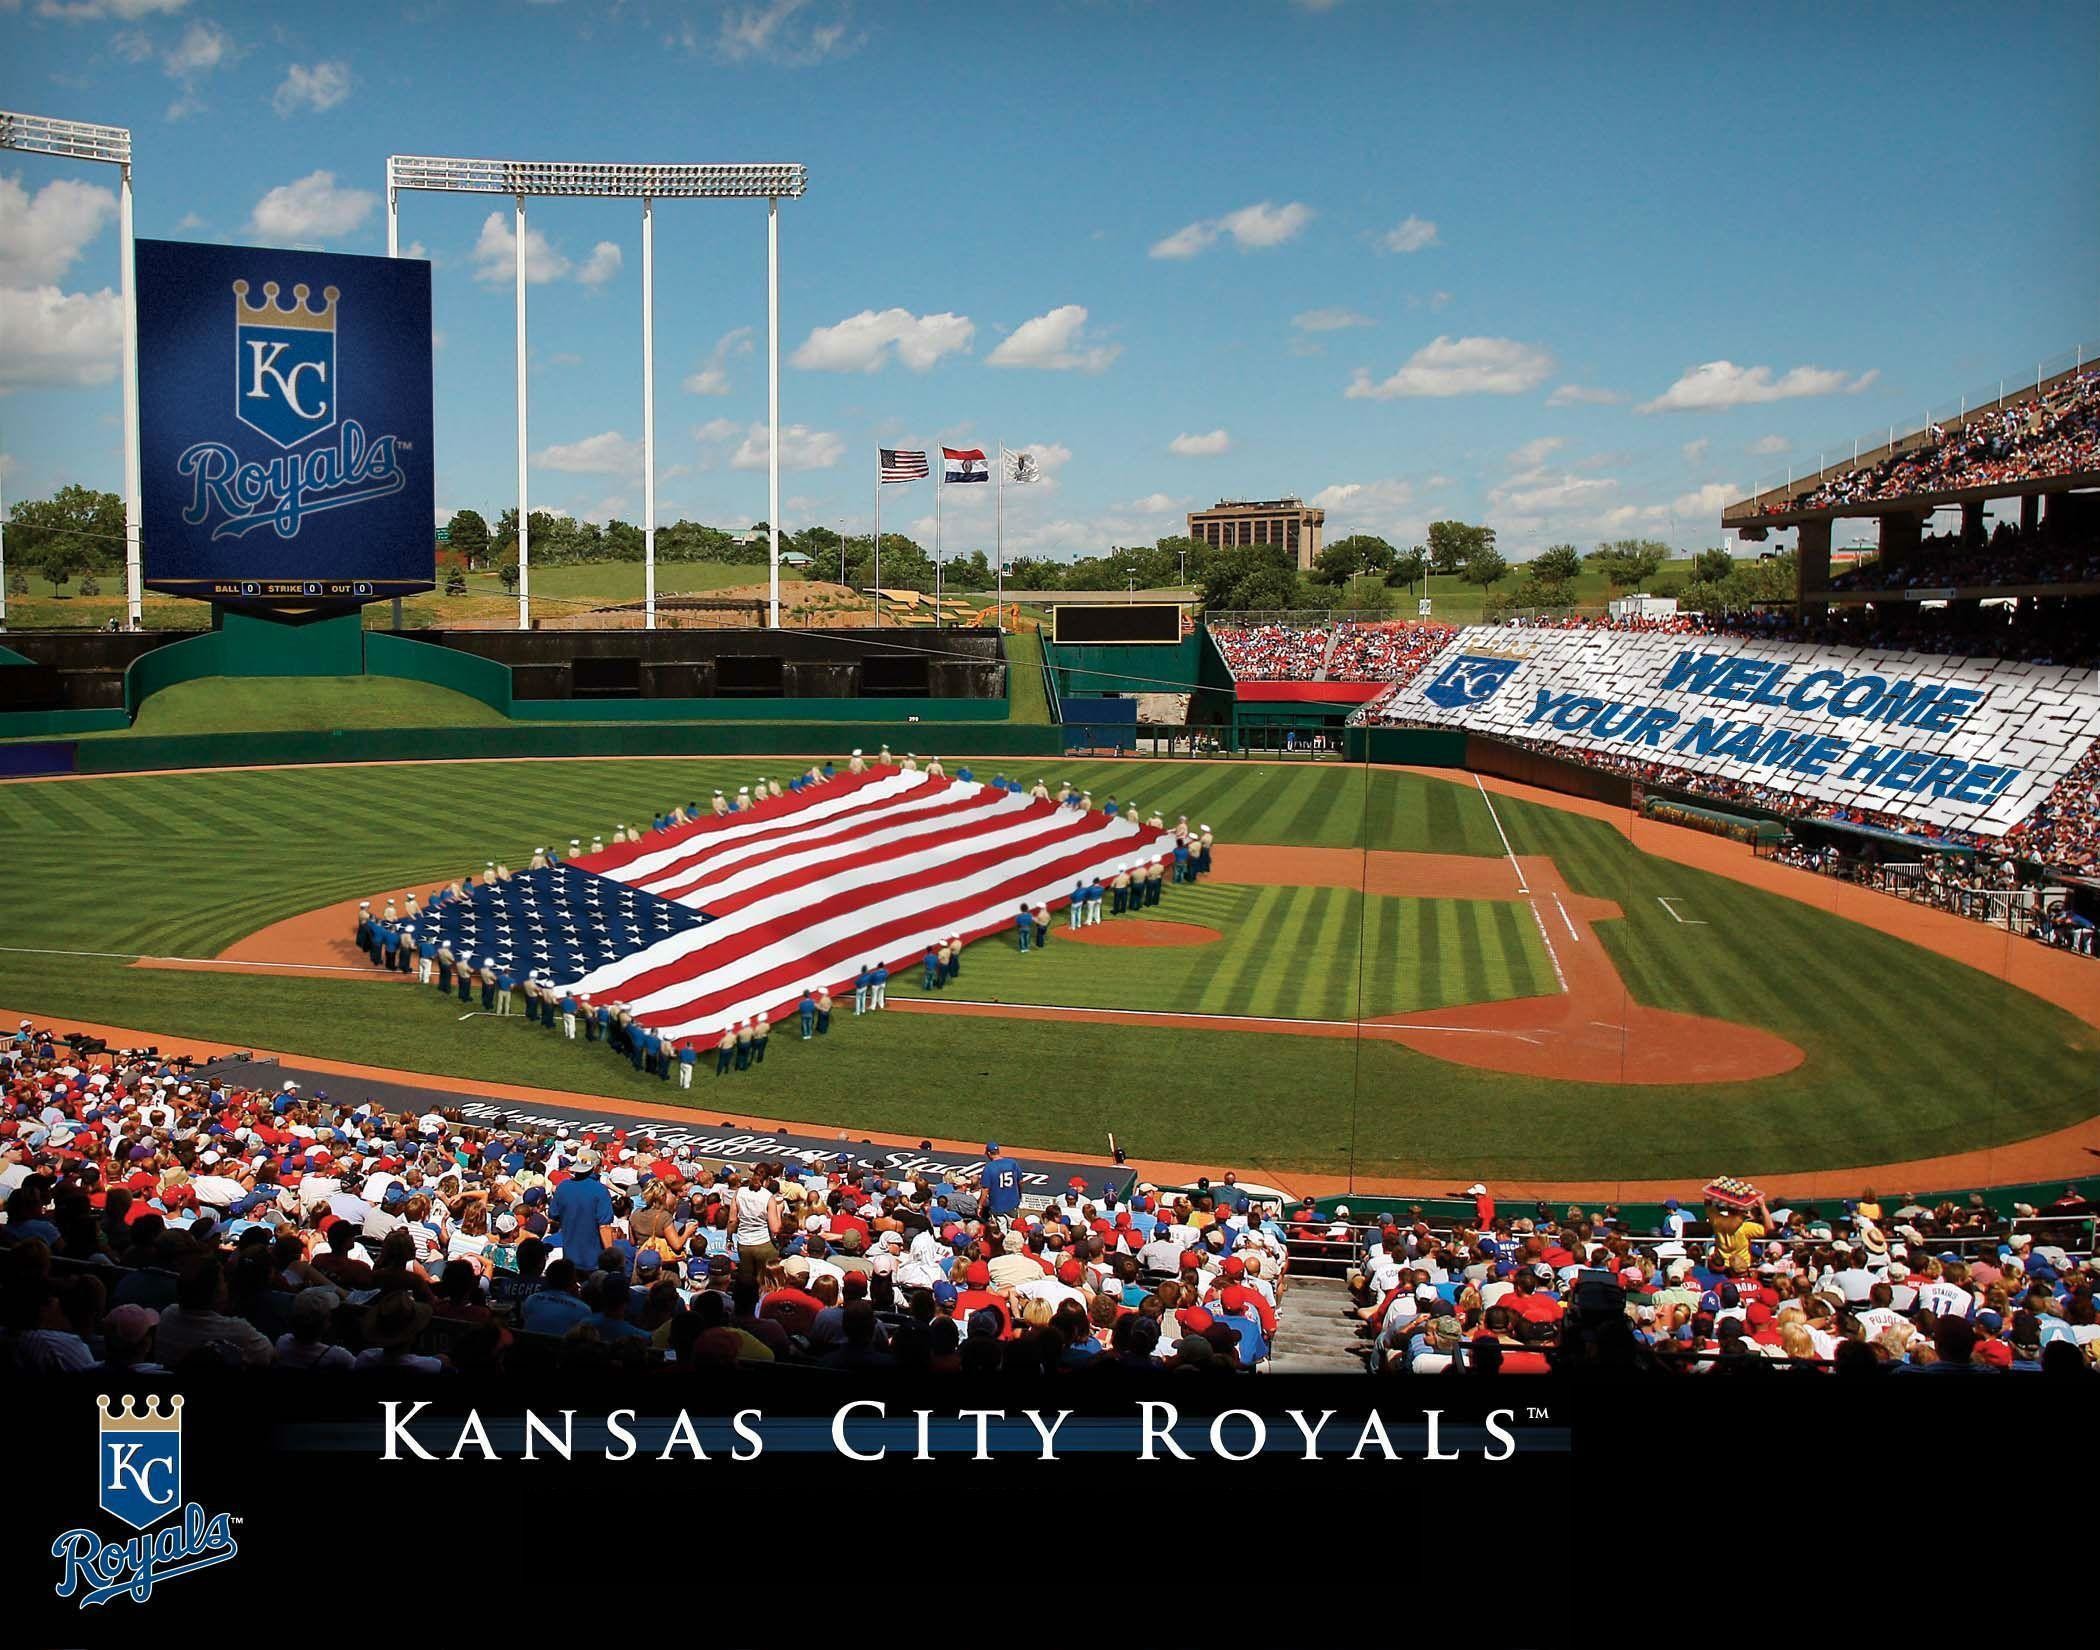 2100x1650 Kansas City Royals iPhone Wallpaper - WallpaperSafari